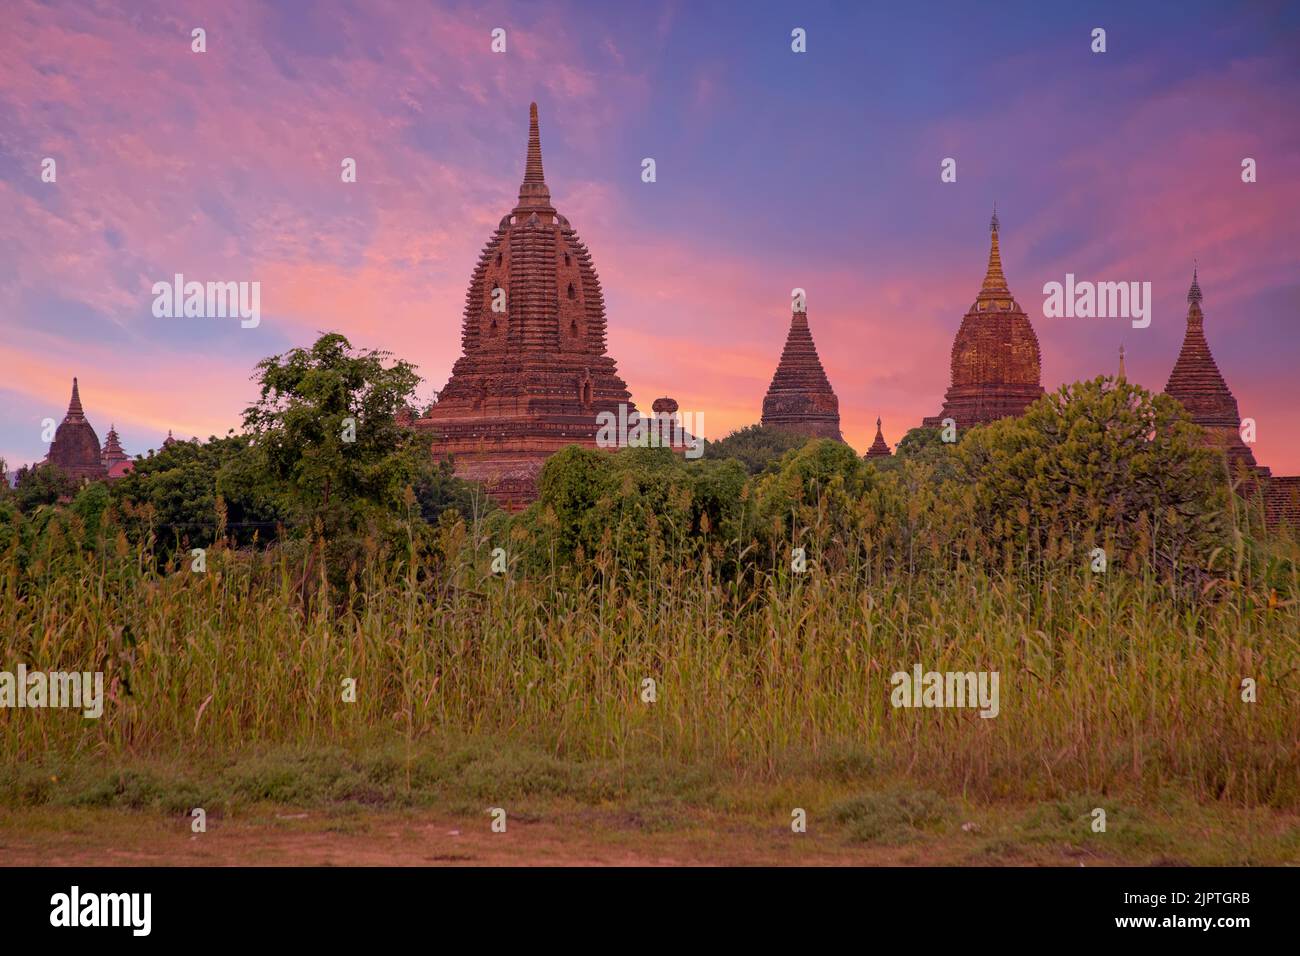 Ancient Temples in Bagan, Myanmar at sunset Stock Photo